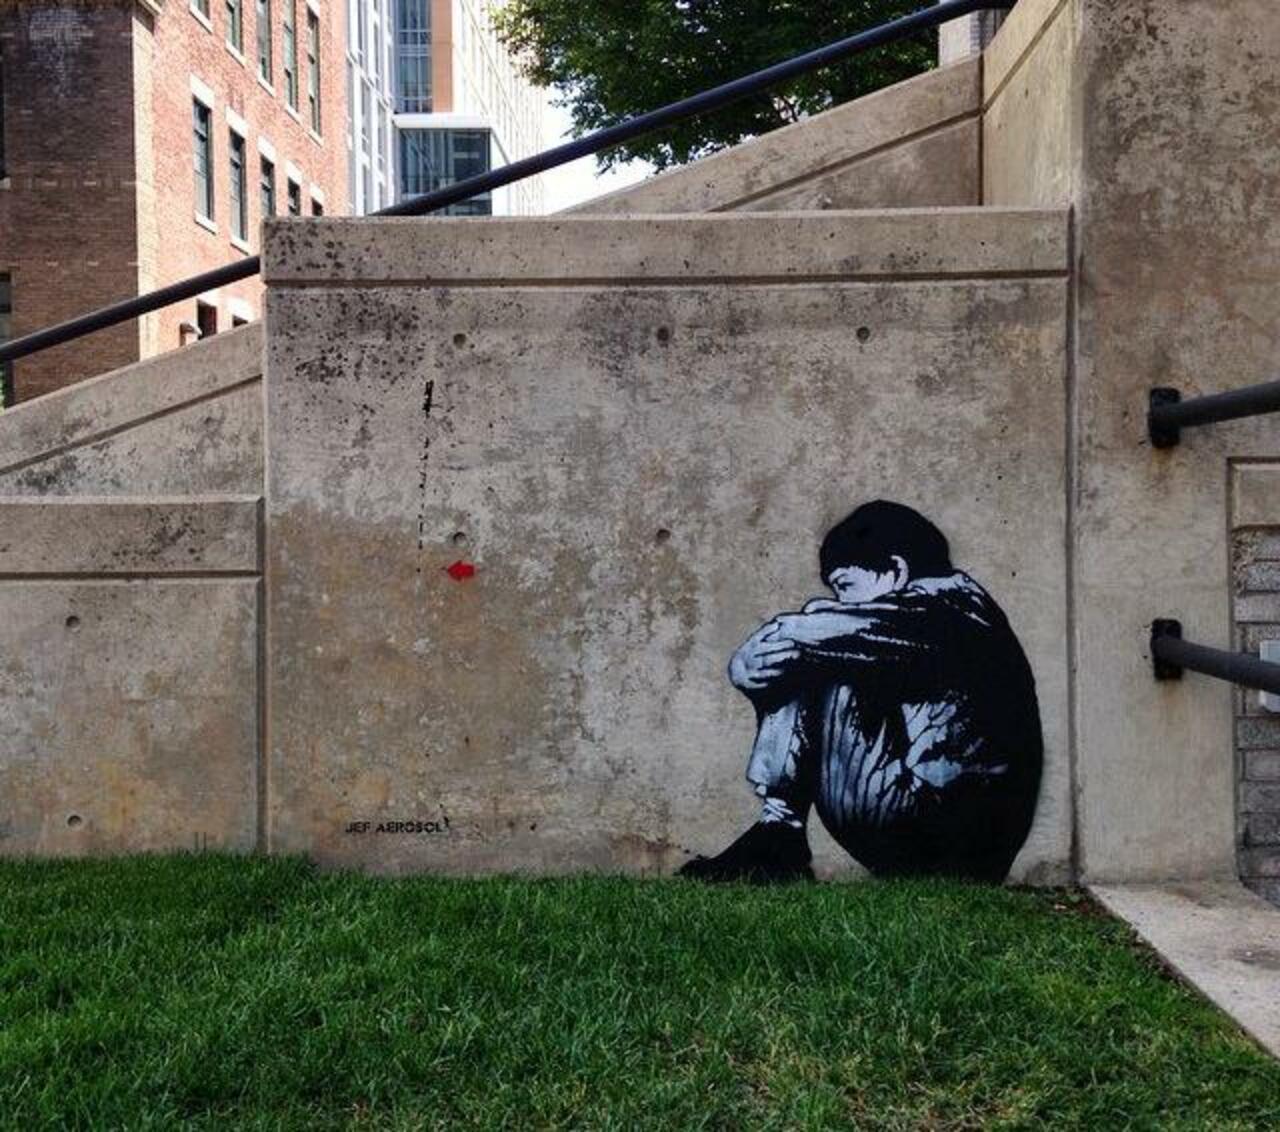 'The Sitting Kid'
Street Art by Jef Aerosol in Boston

#art #arte #graffiti #streetart http://t.co/EgIYGg71so